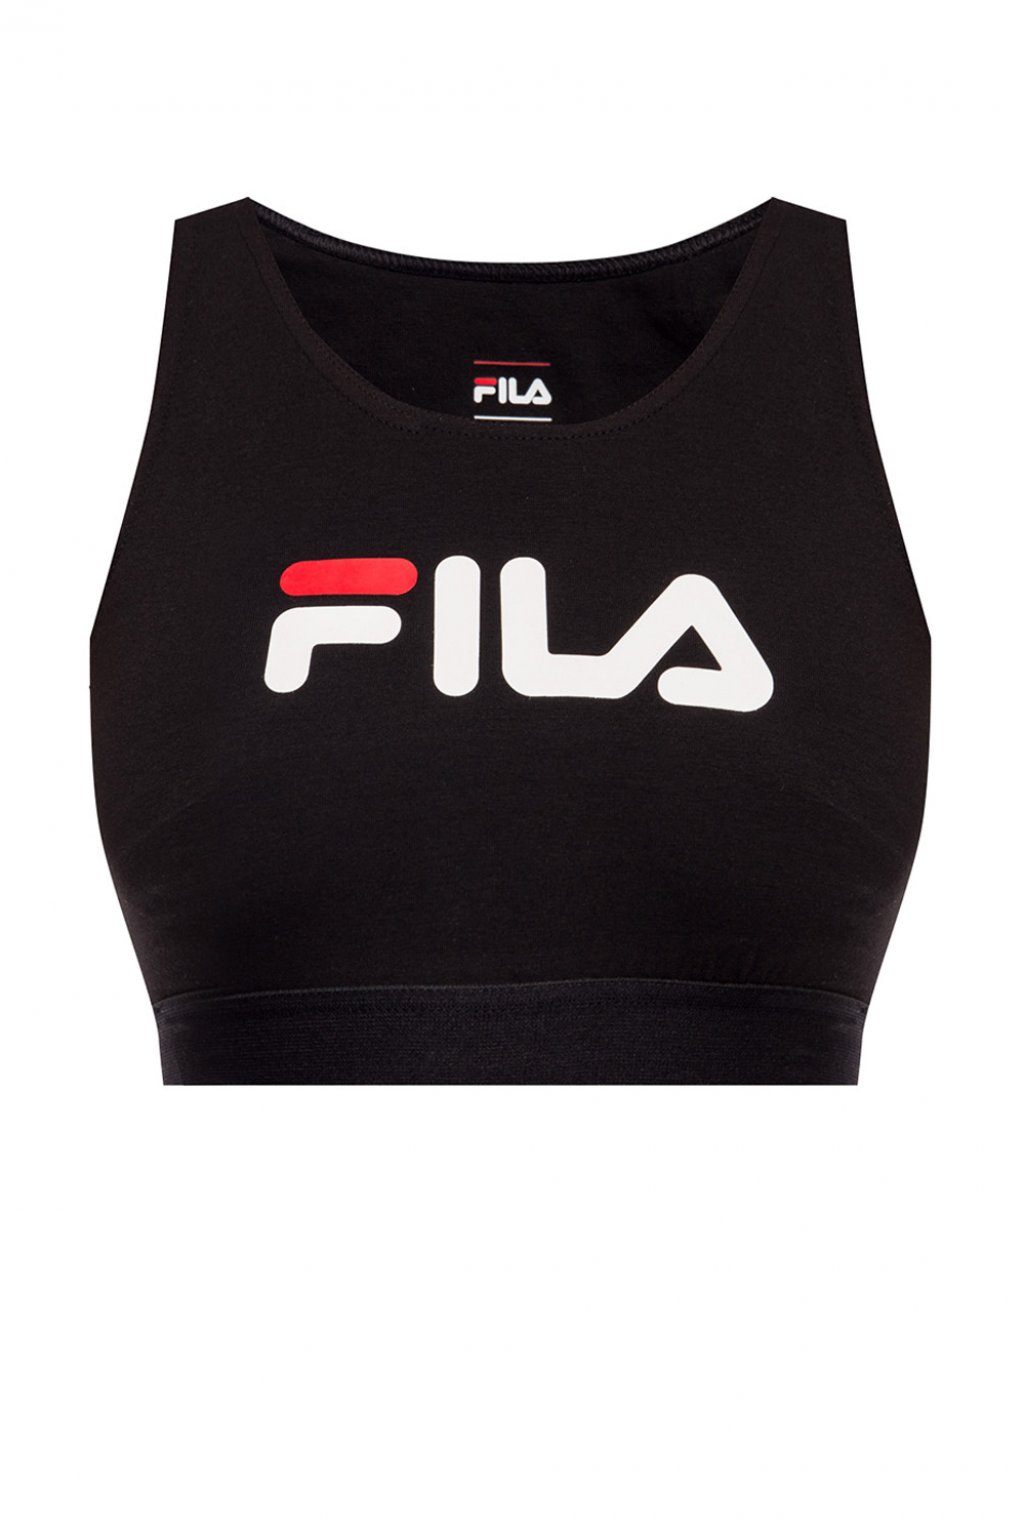 Black Sports bra with logo Fila - Vitkac Germany